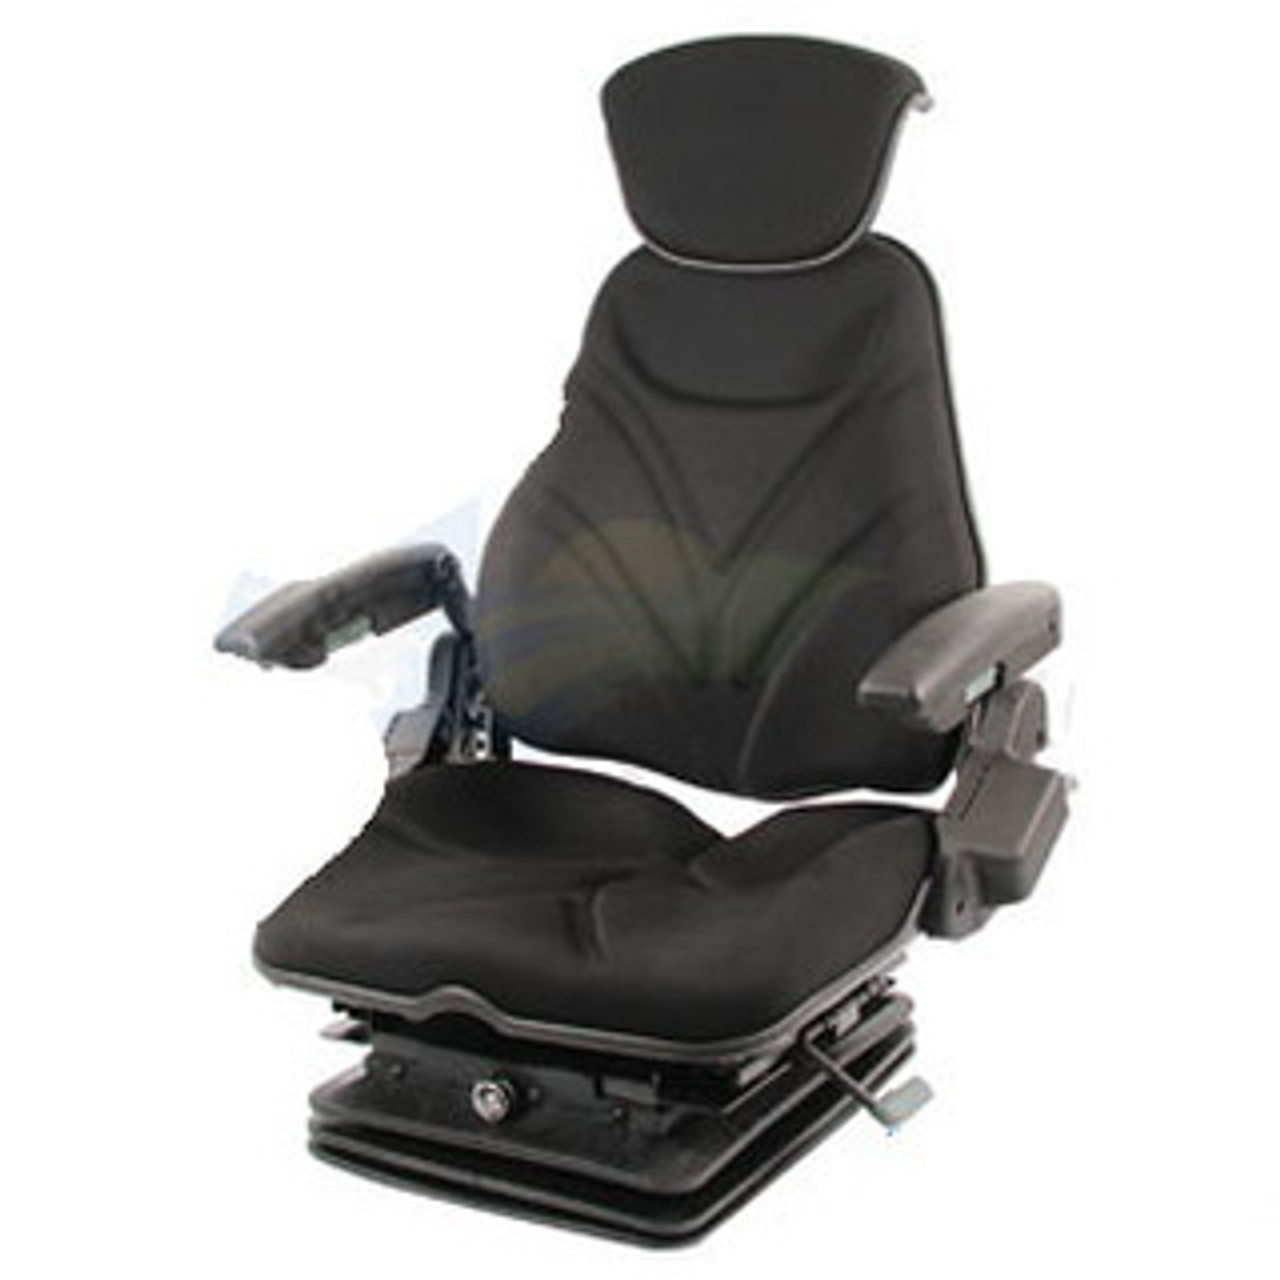 Case-IH Tractor Seat A-F20A265 F20 Series, Air Suspension 12 Volt, Black Cloth / Armrest / Headrest / Black Cloth